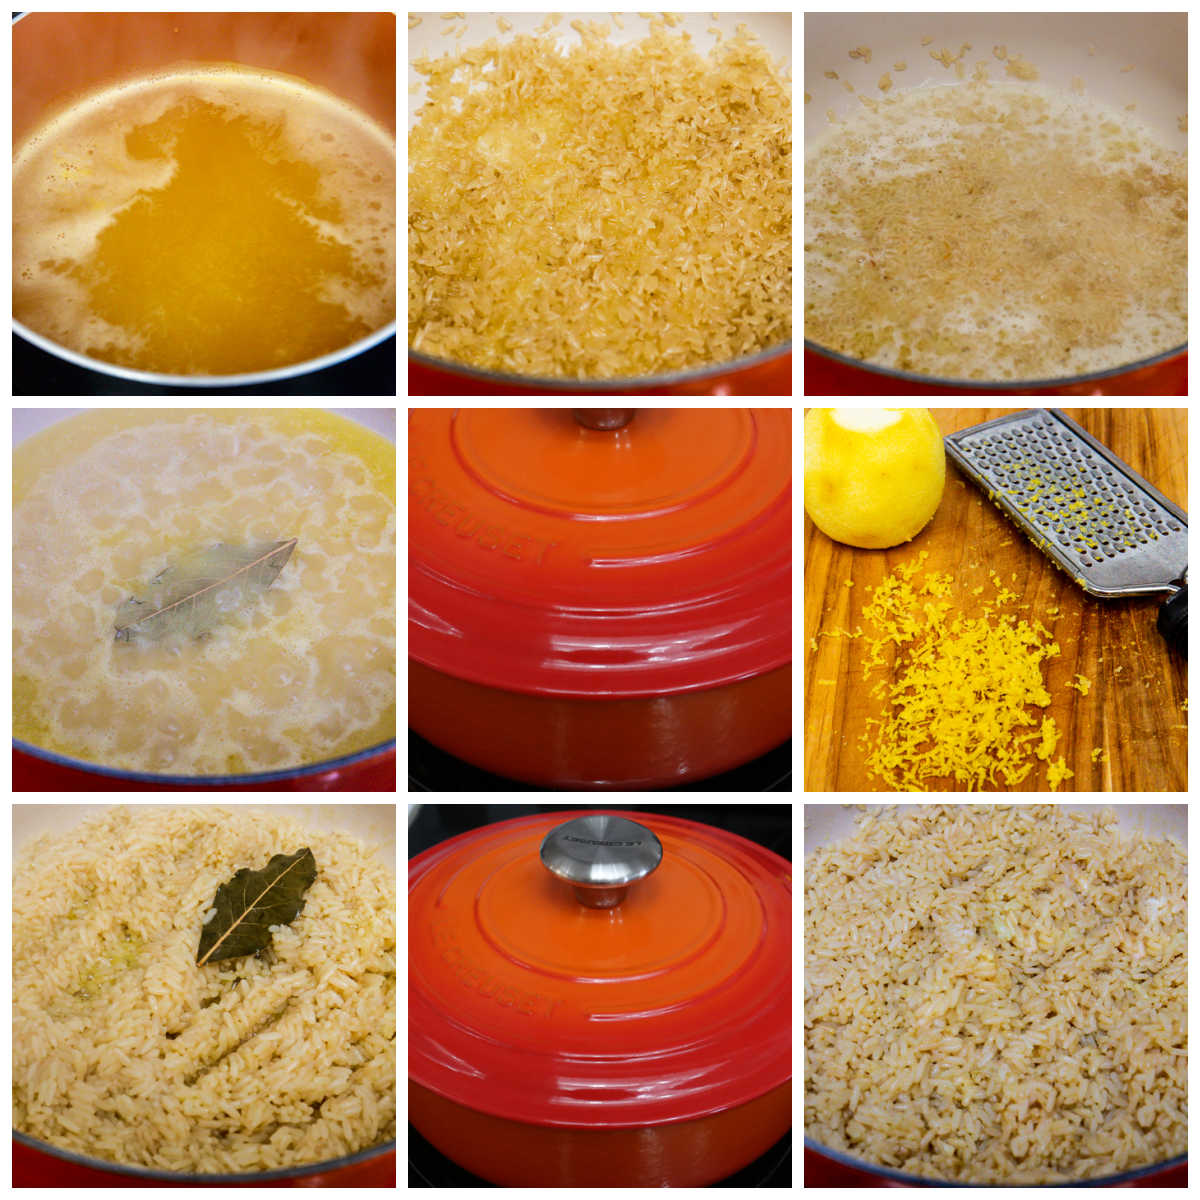 Greek Lemon Rice process shot collage.